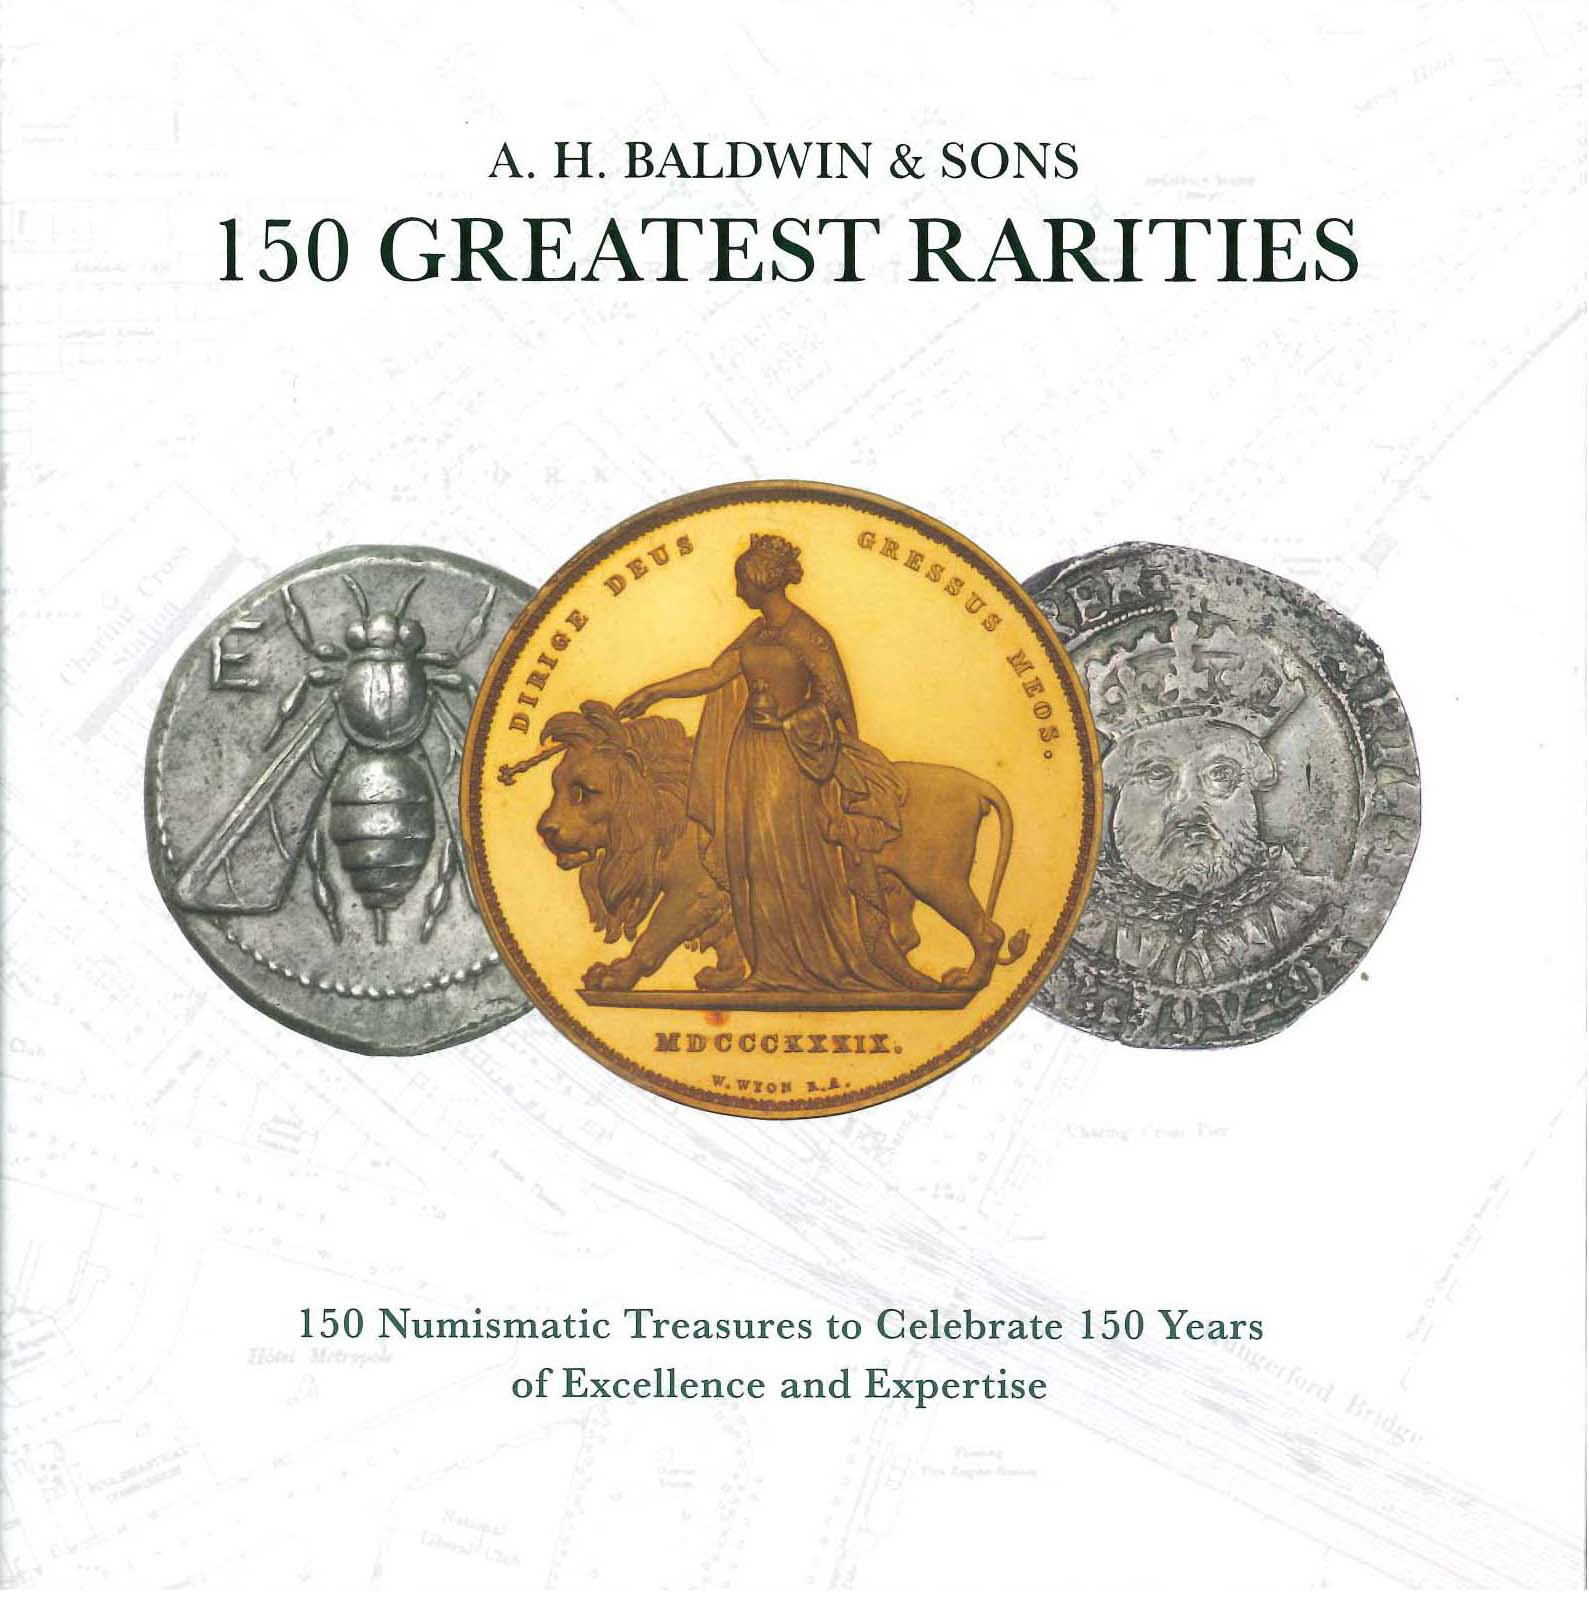 The Baldwin & Sons 150th anniversary book